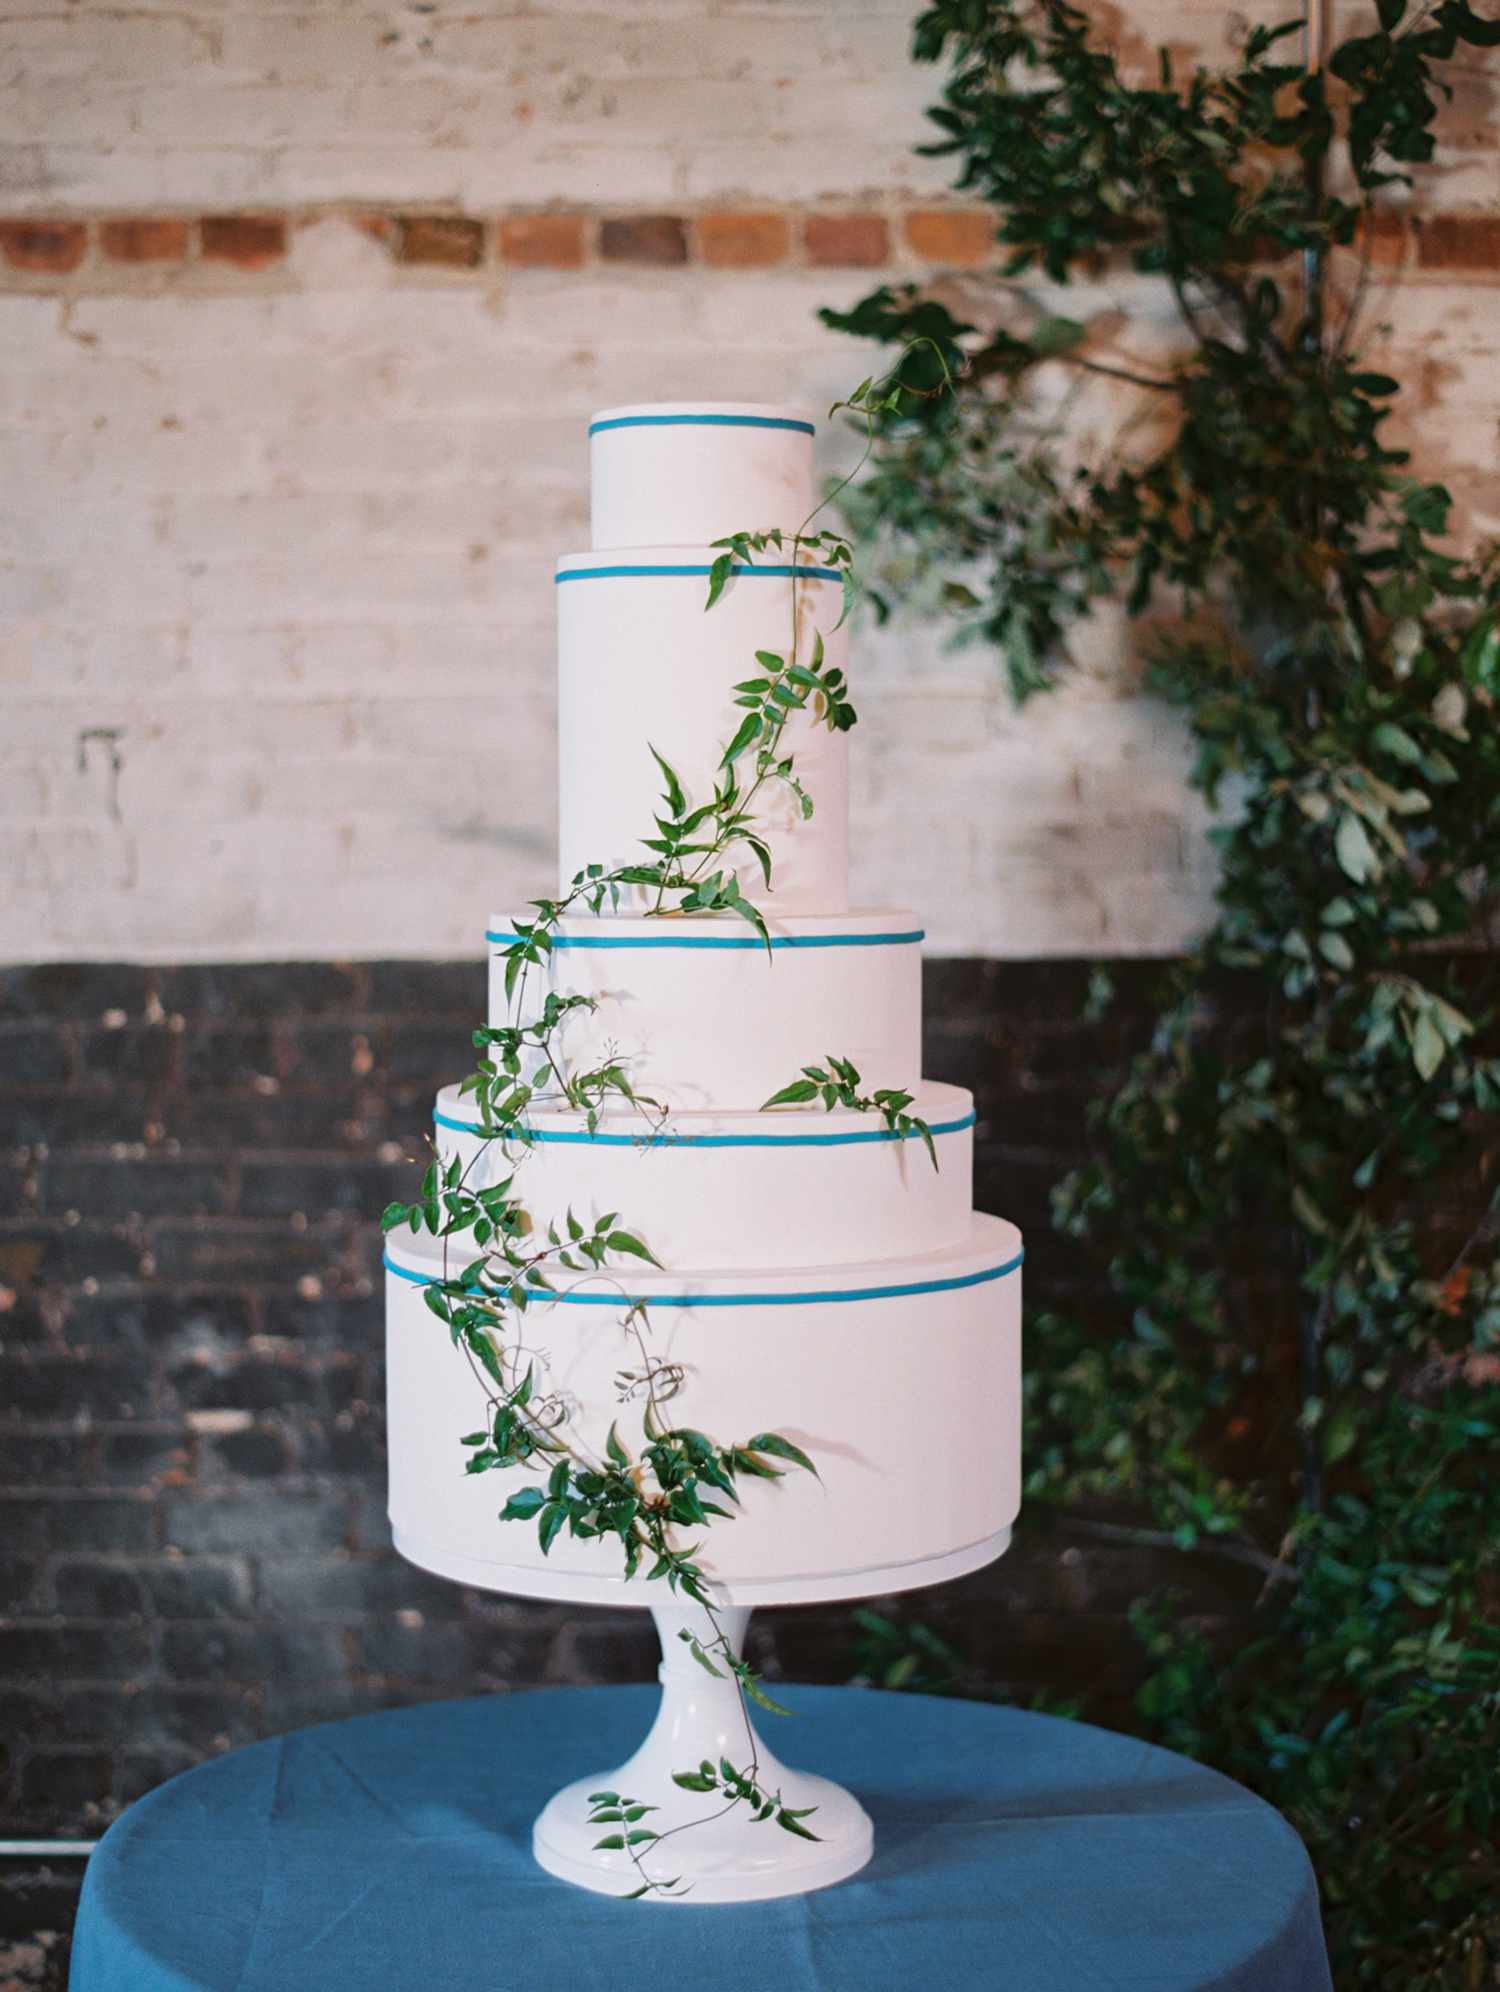 5-tier white wedding cake with greenery